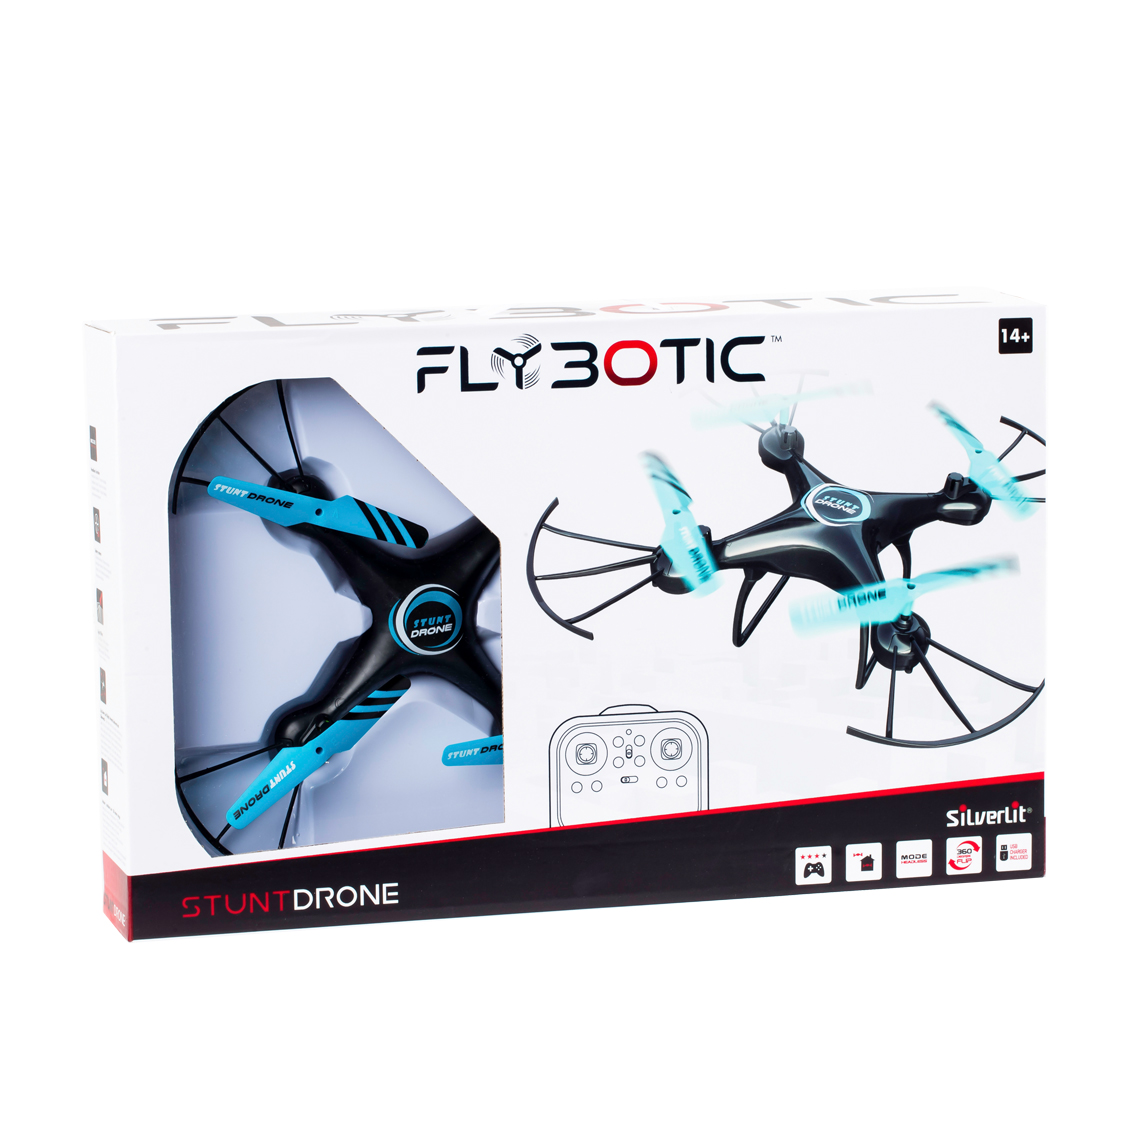 Silverlit Flybotic Stunt Drone. Freepost Within Mainland UK